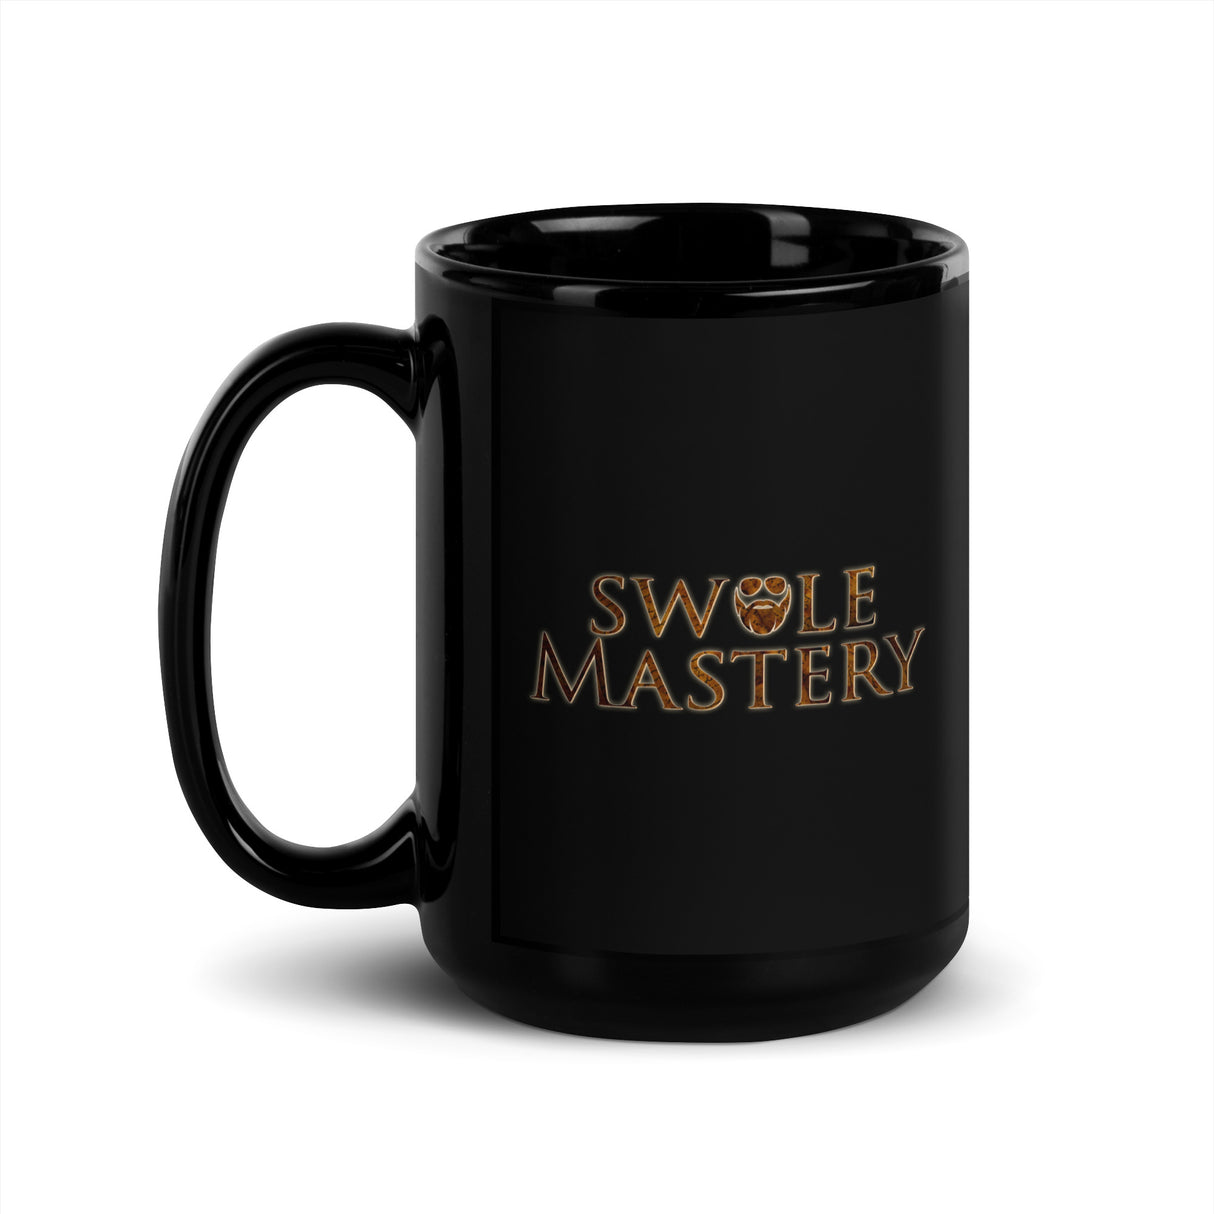 Swole Mastery Mug